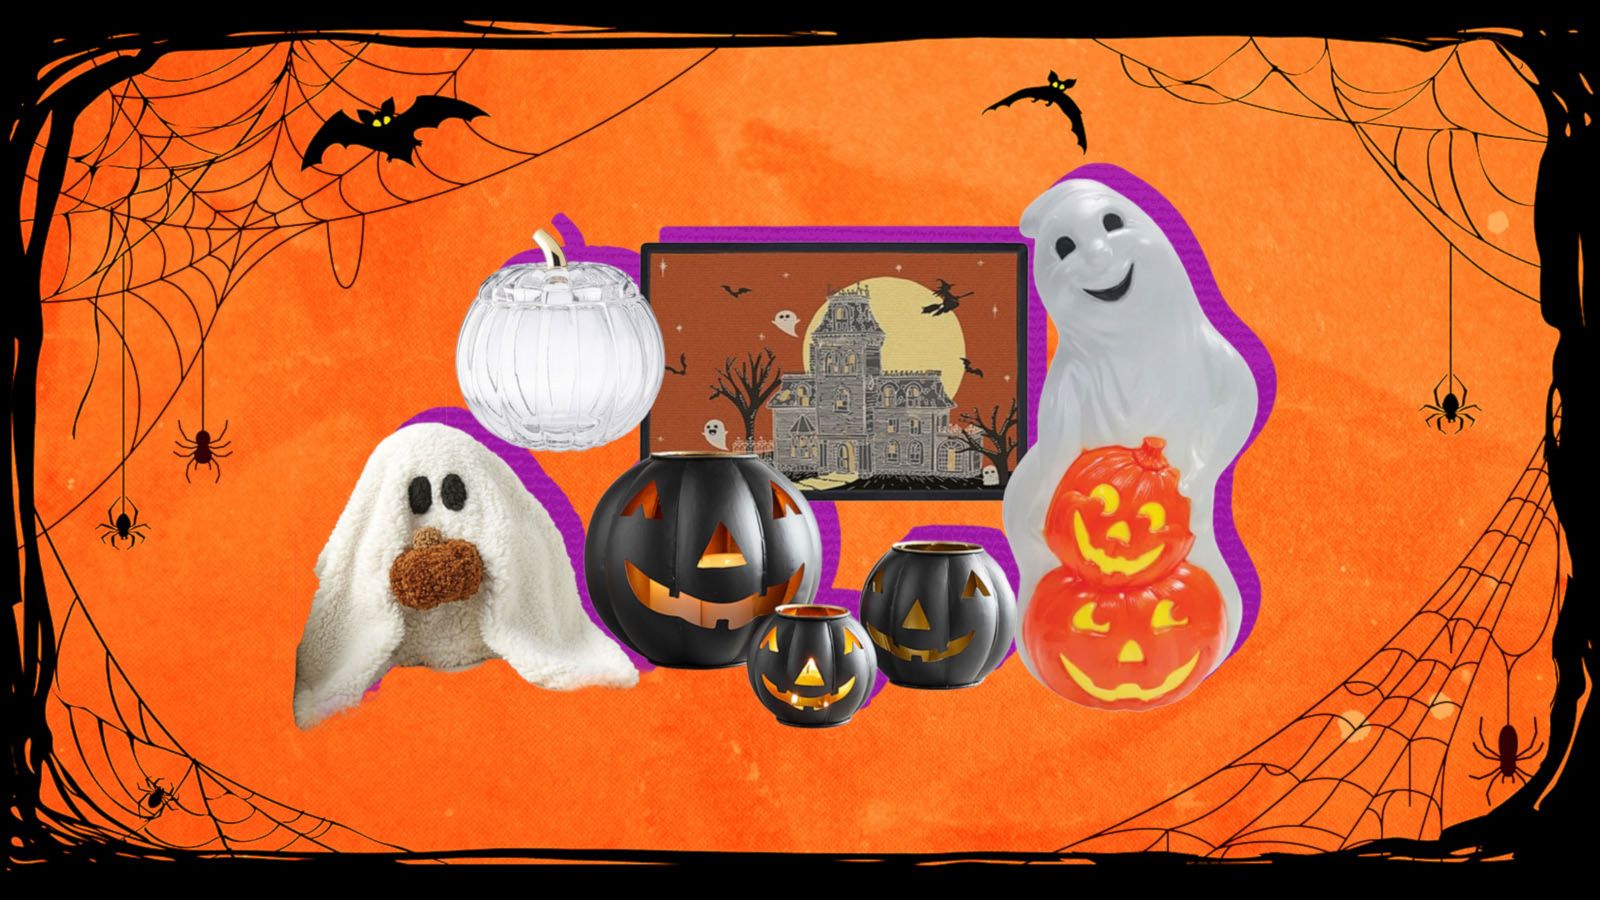 https://s.abcnews.com/images/GMA/Halloween_Main_Image_v03_ag_1695401953092_hpMain_16x9_1600.jpg